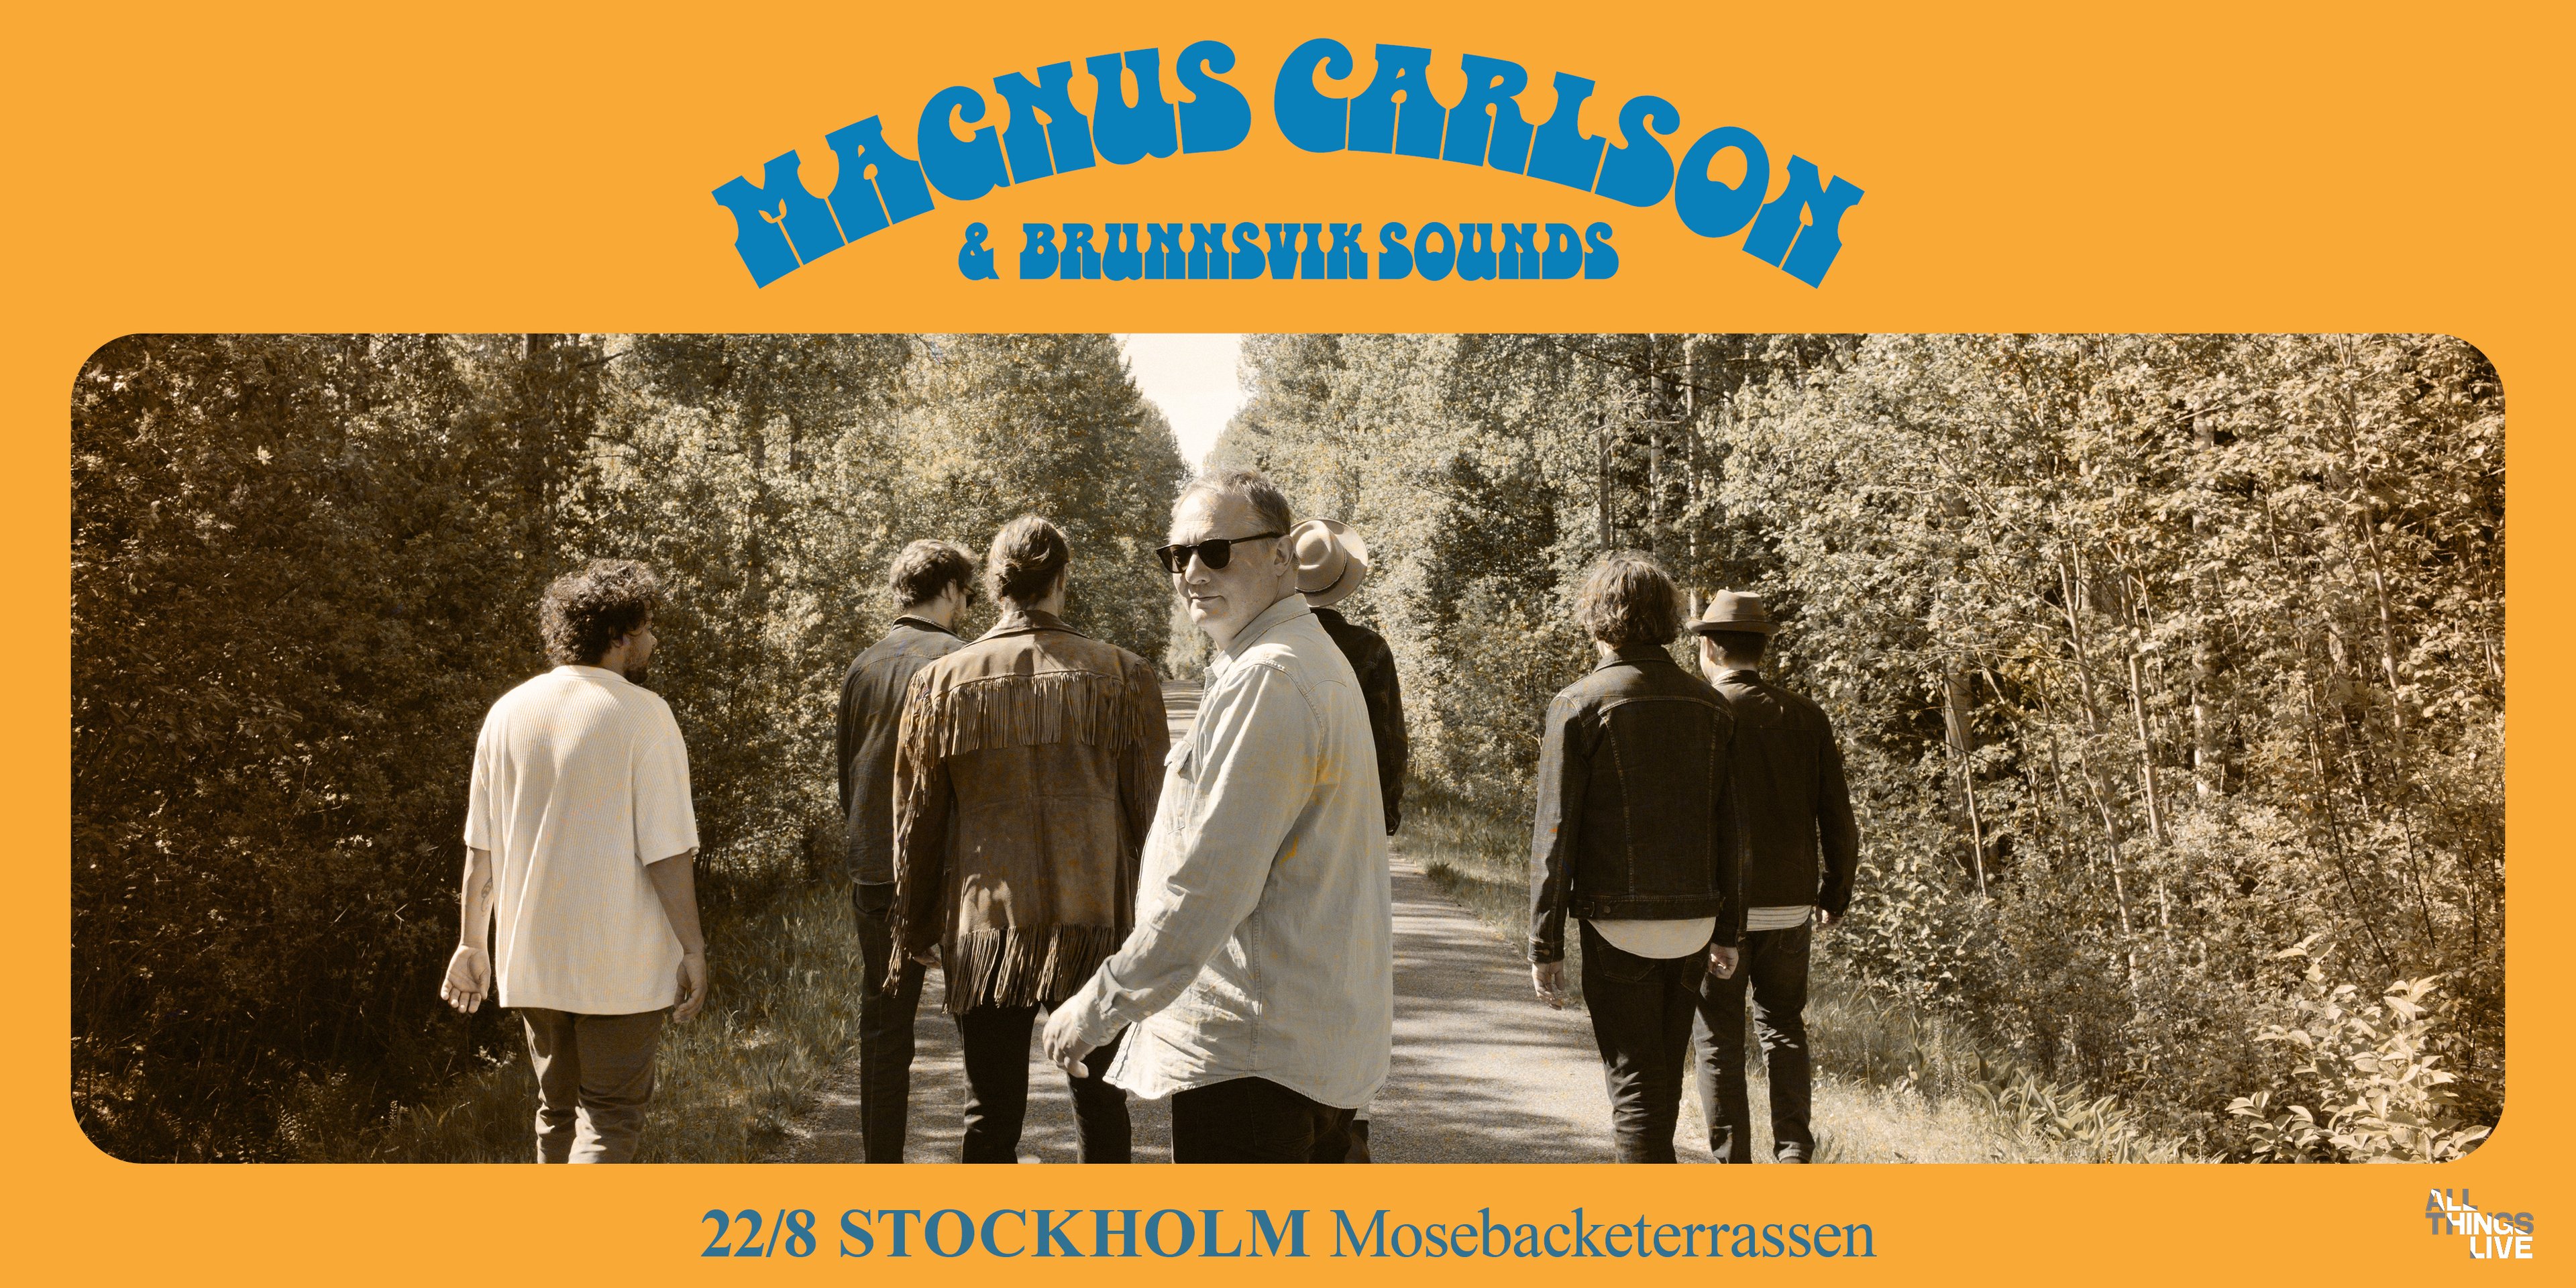 Magnus Carlson & Brunnsvik Sounds